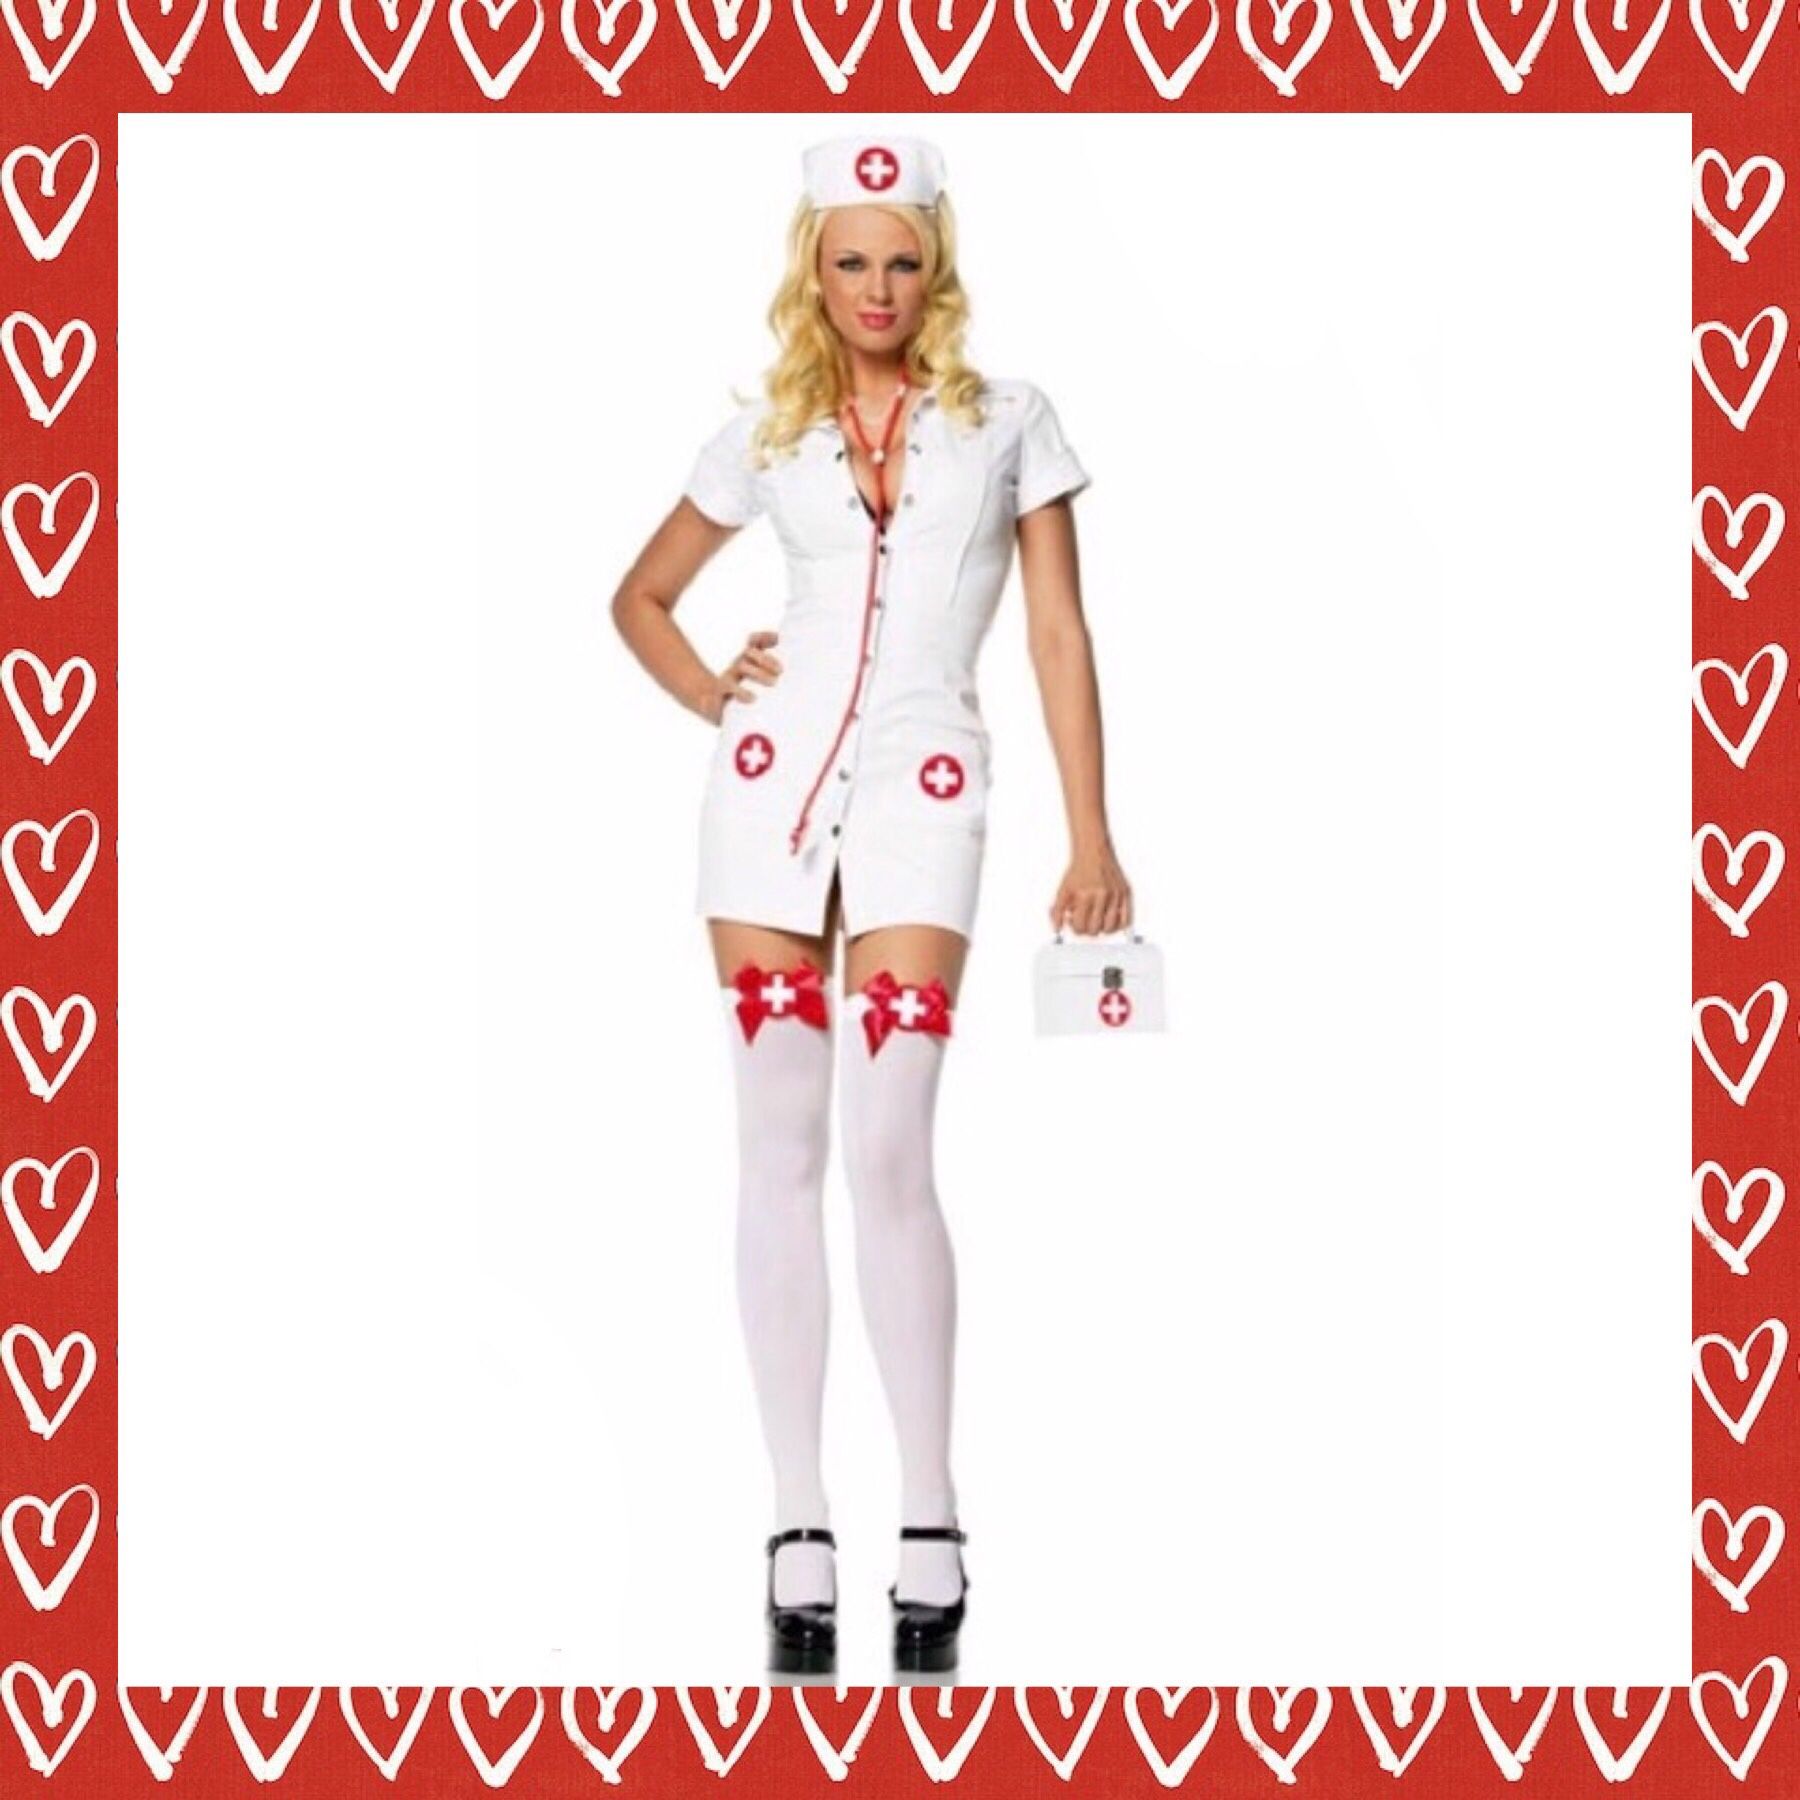 “CALL THE 💉 NURSE!” Women’s deluxe pleather nurse costume size MEDIUM - NEW!